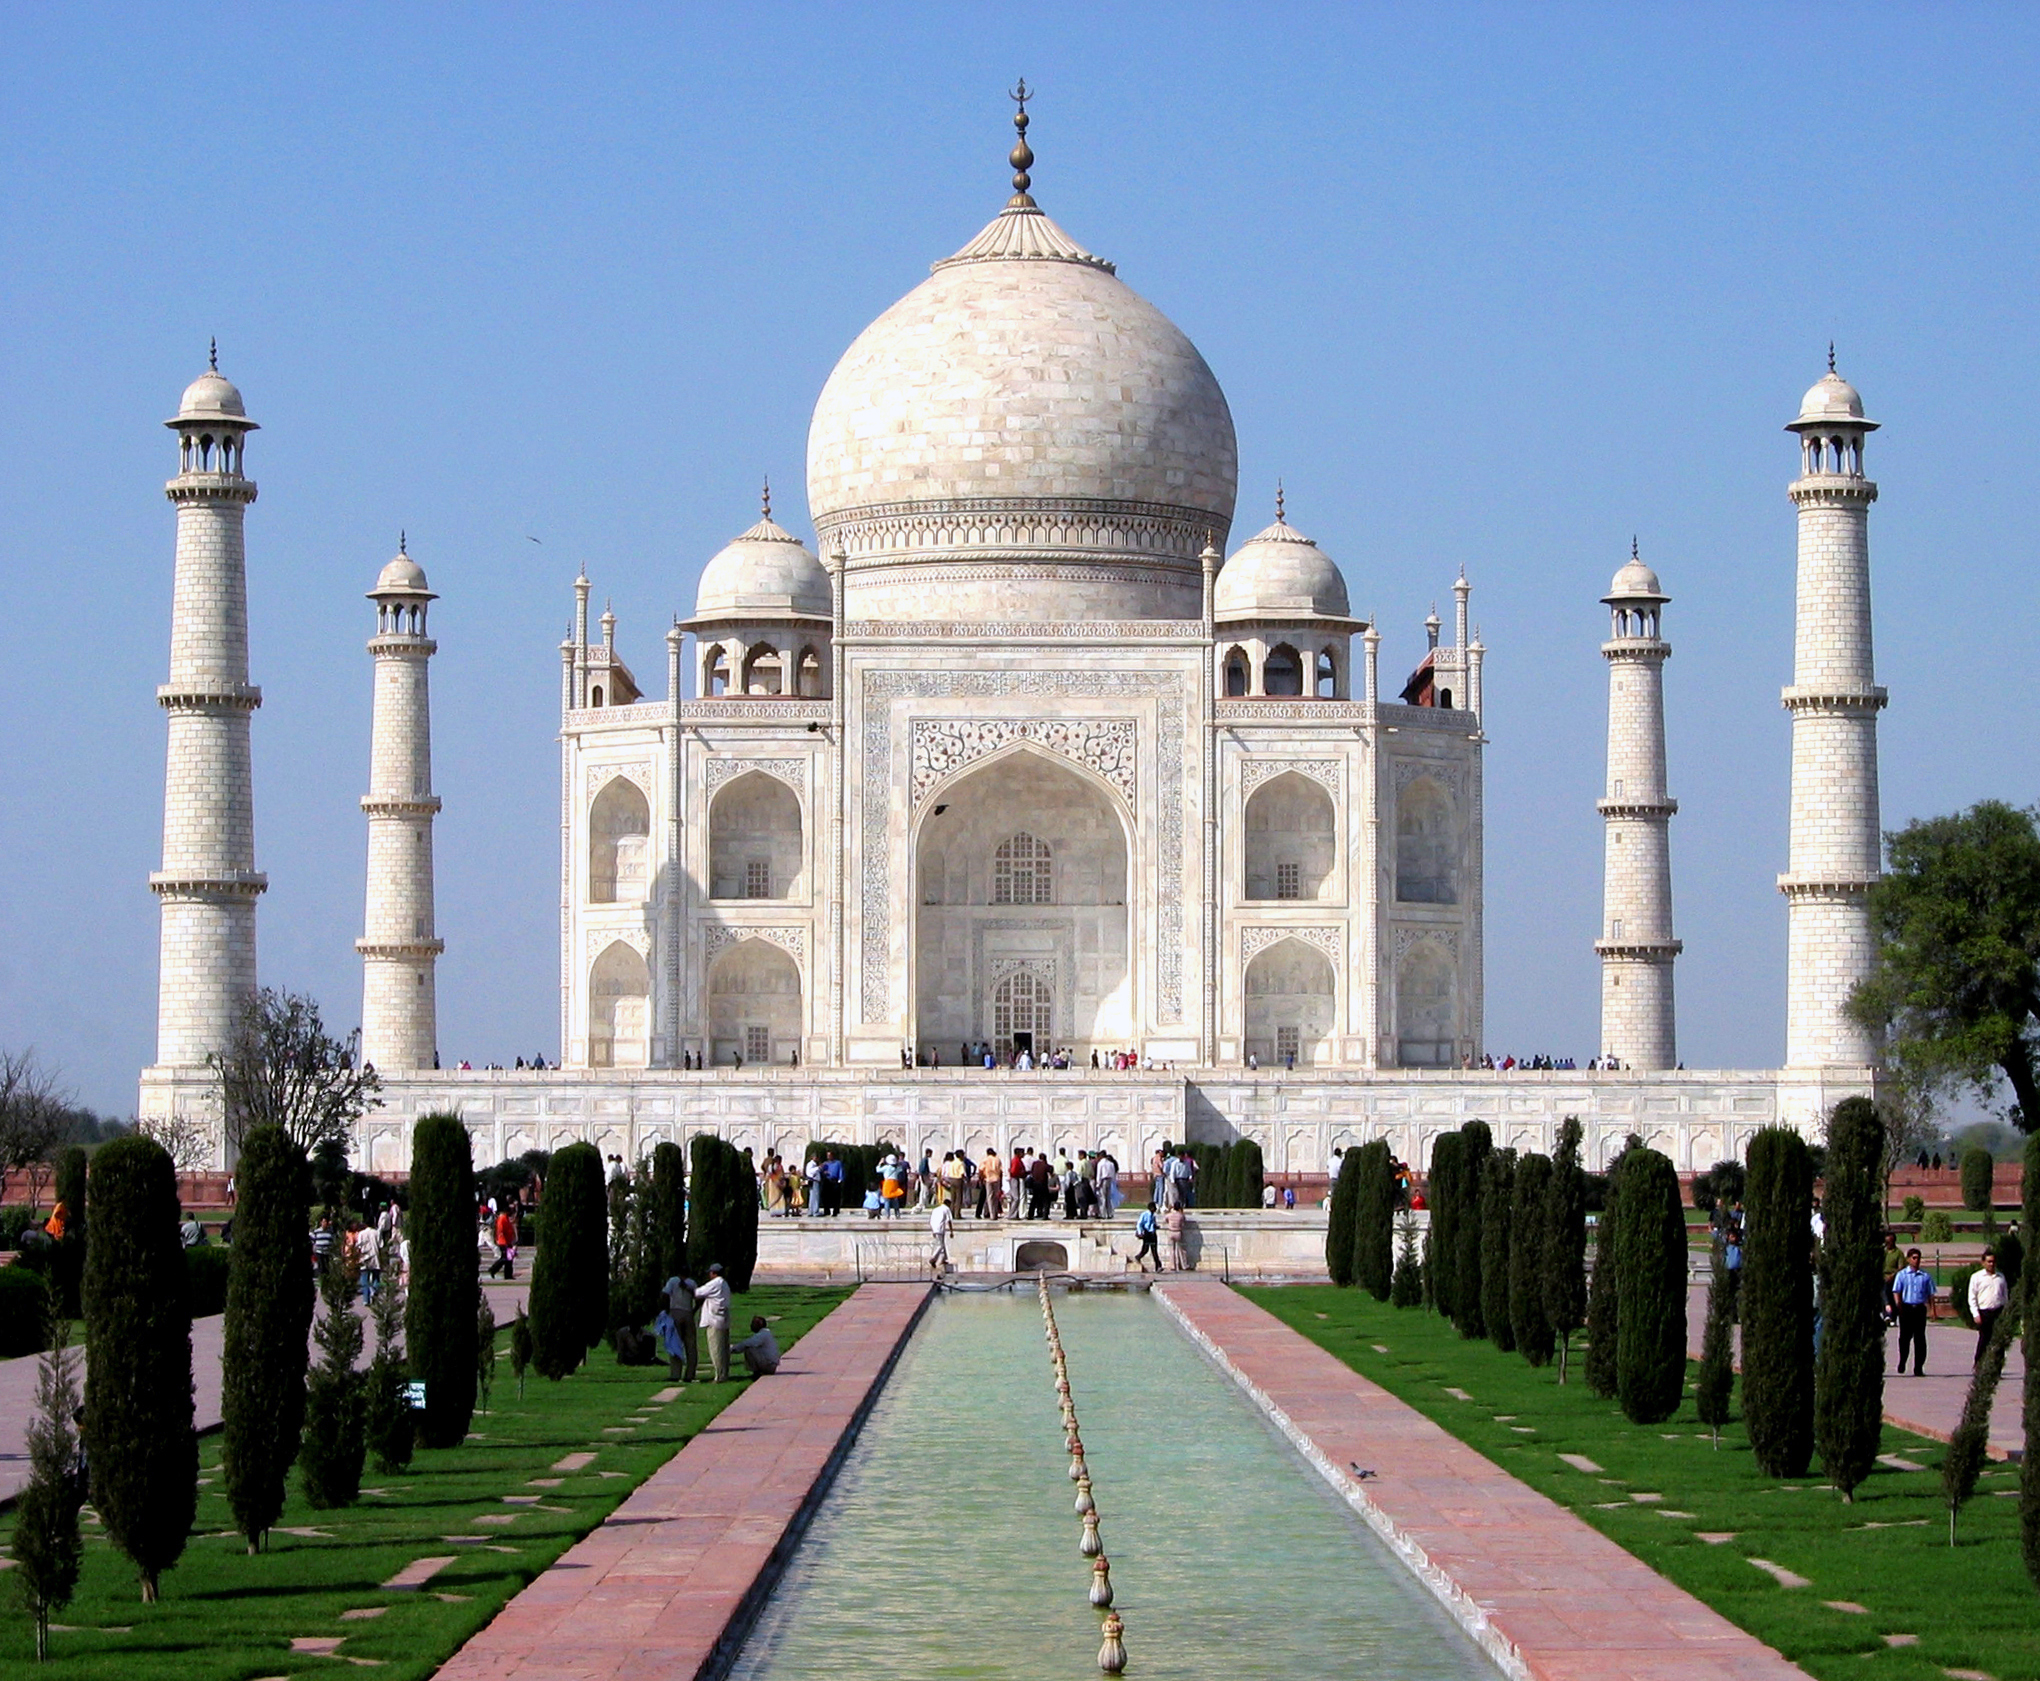 http://upload.wikimedia.org/wikipedia/commons/c/c8/Taj_Mahal_in_March_2004.jpg